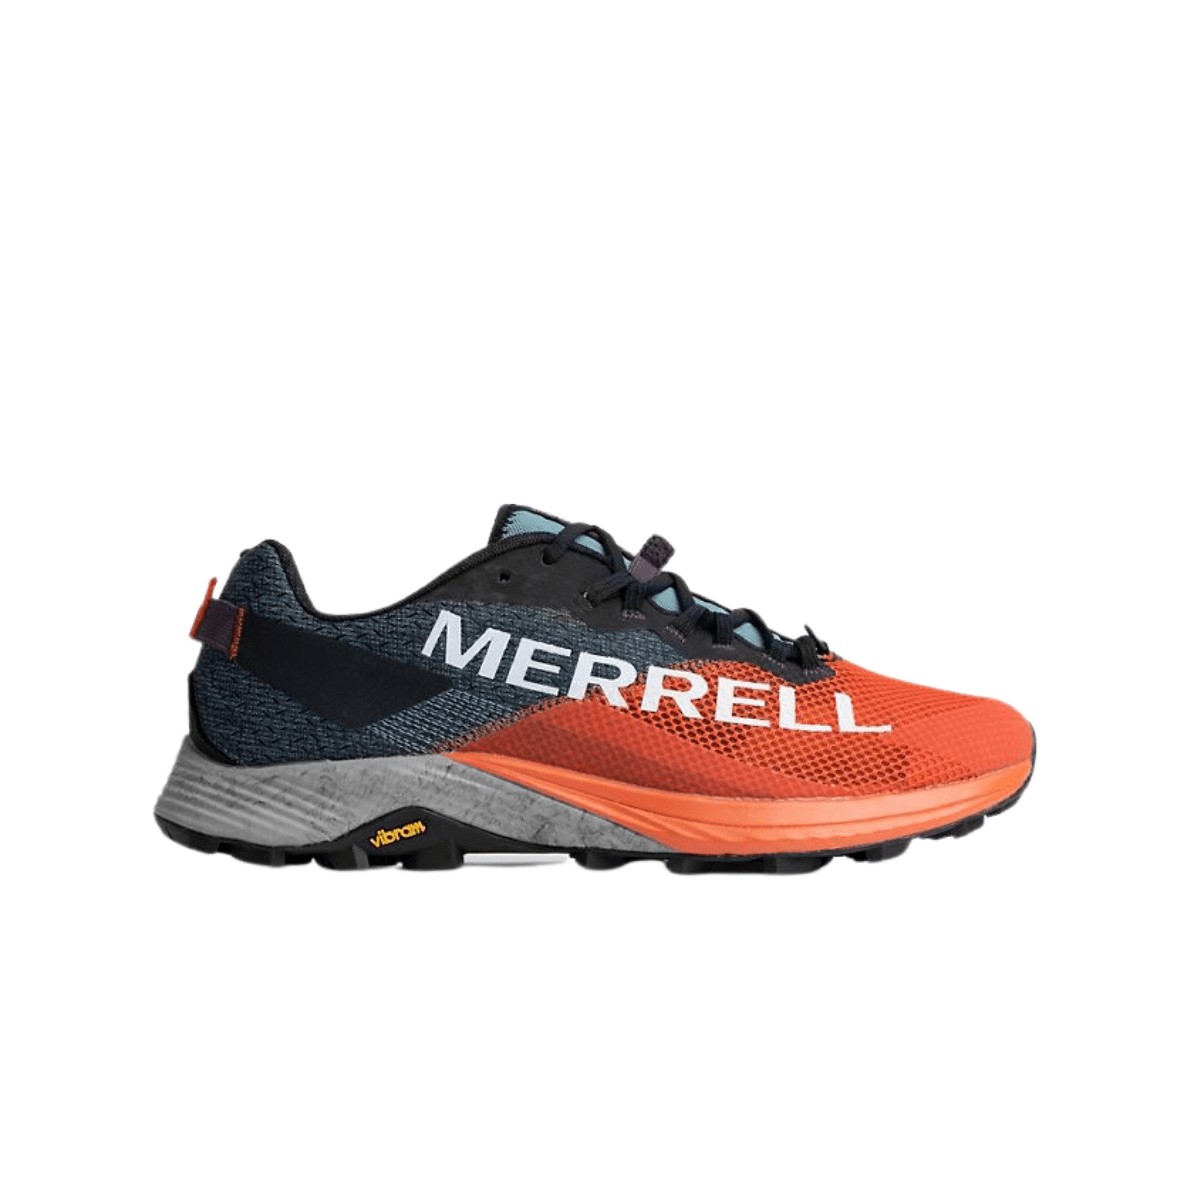 Angebot Merrell 2 Schuhe | Bestpreis